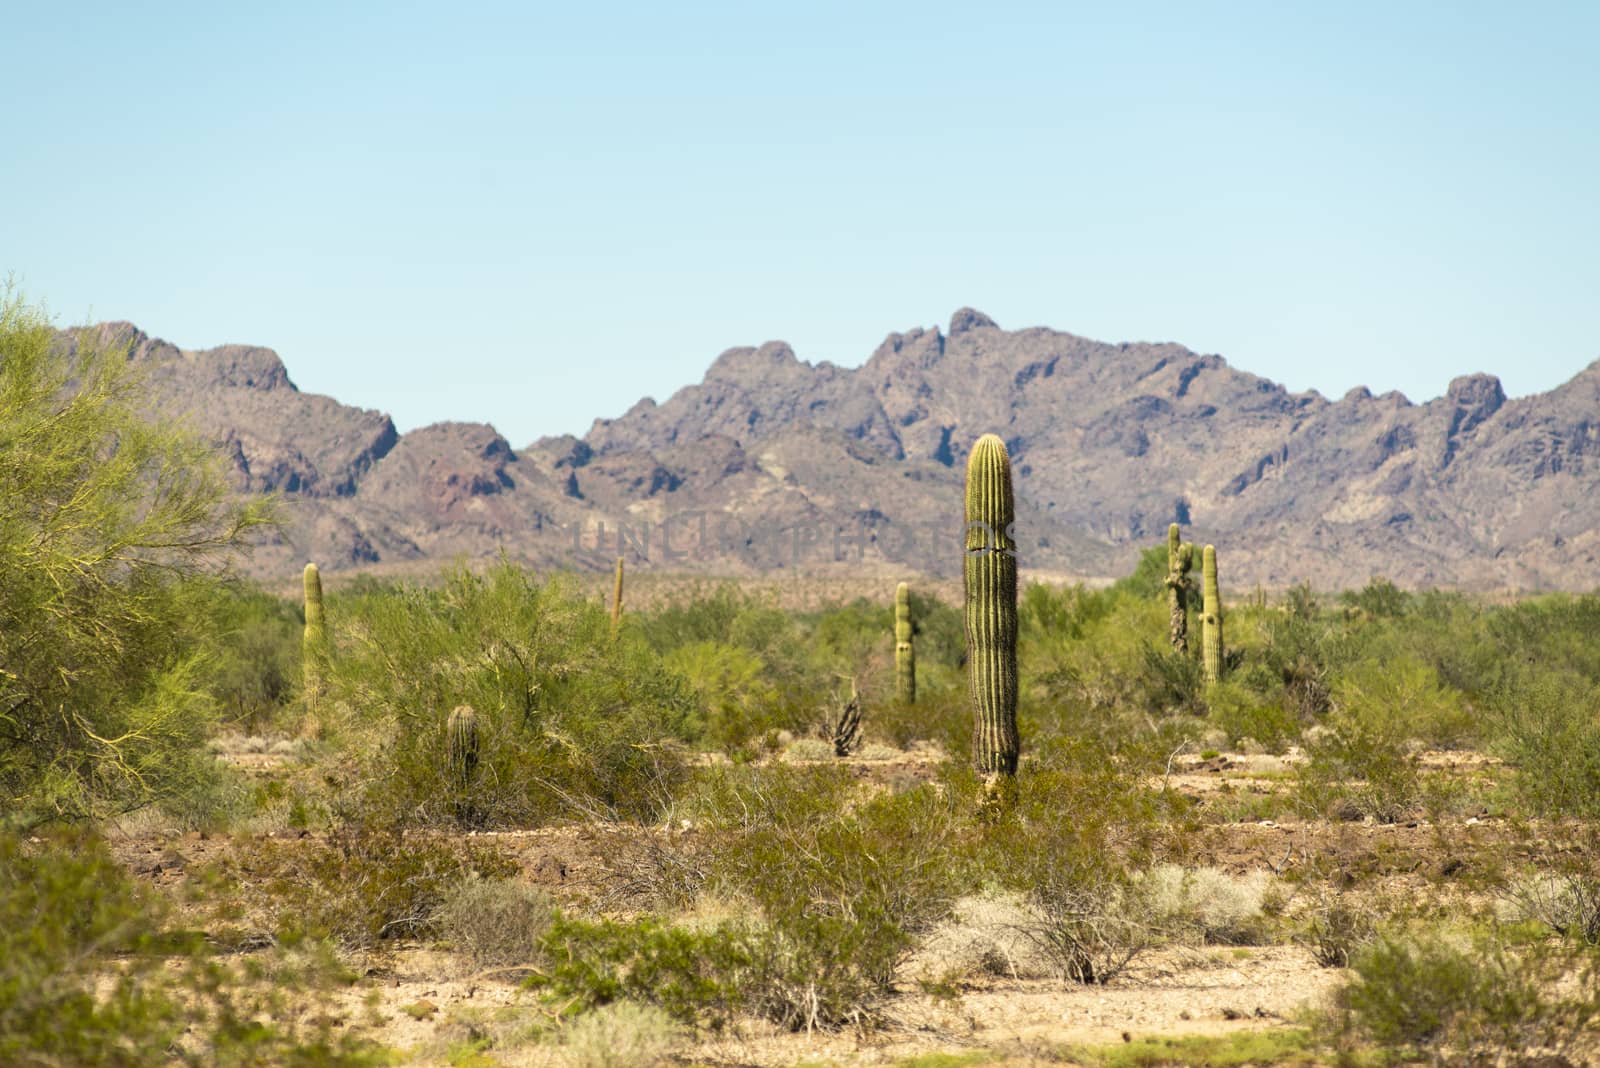 Saguaro cacti in desert of Arizona  by Njean